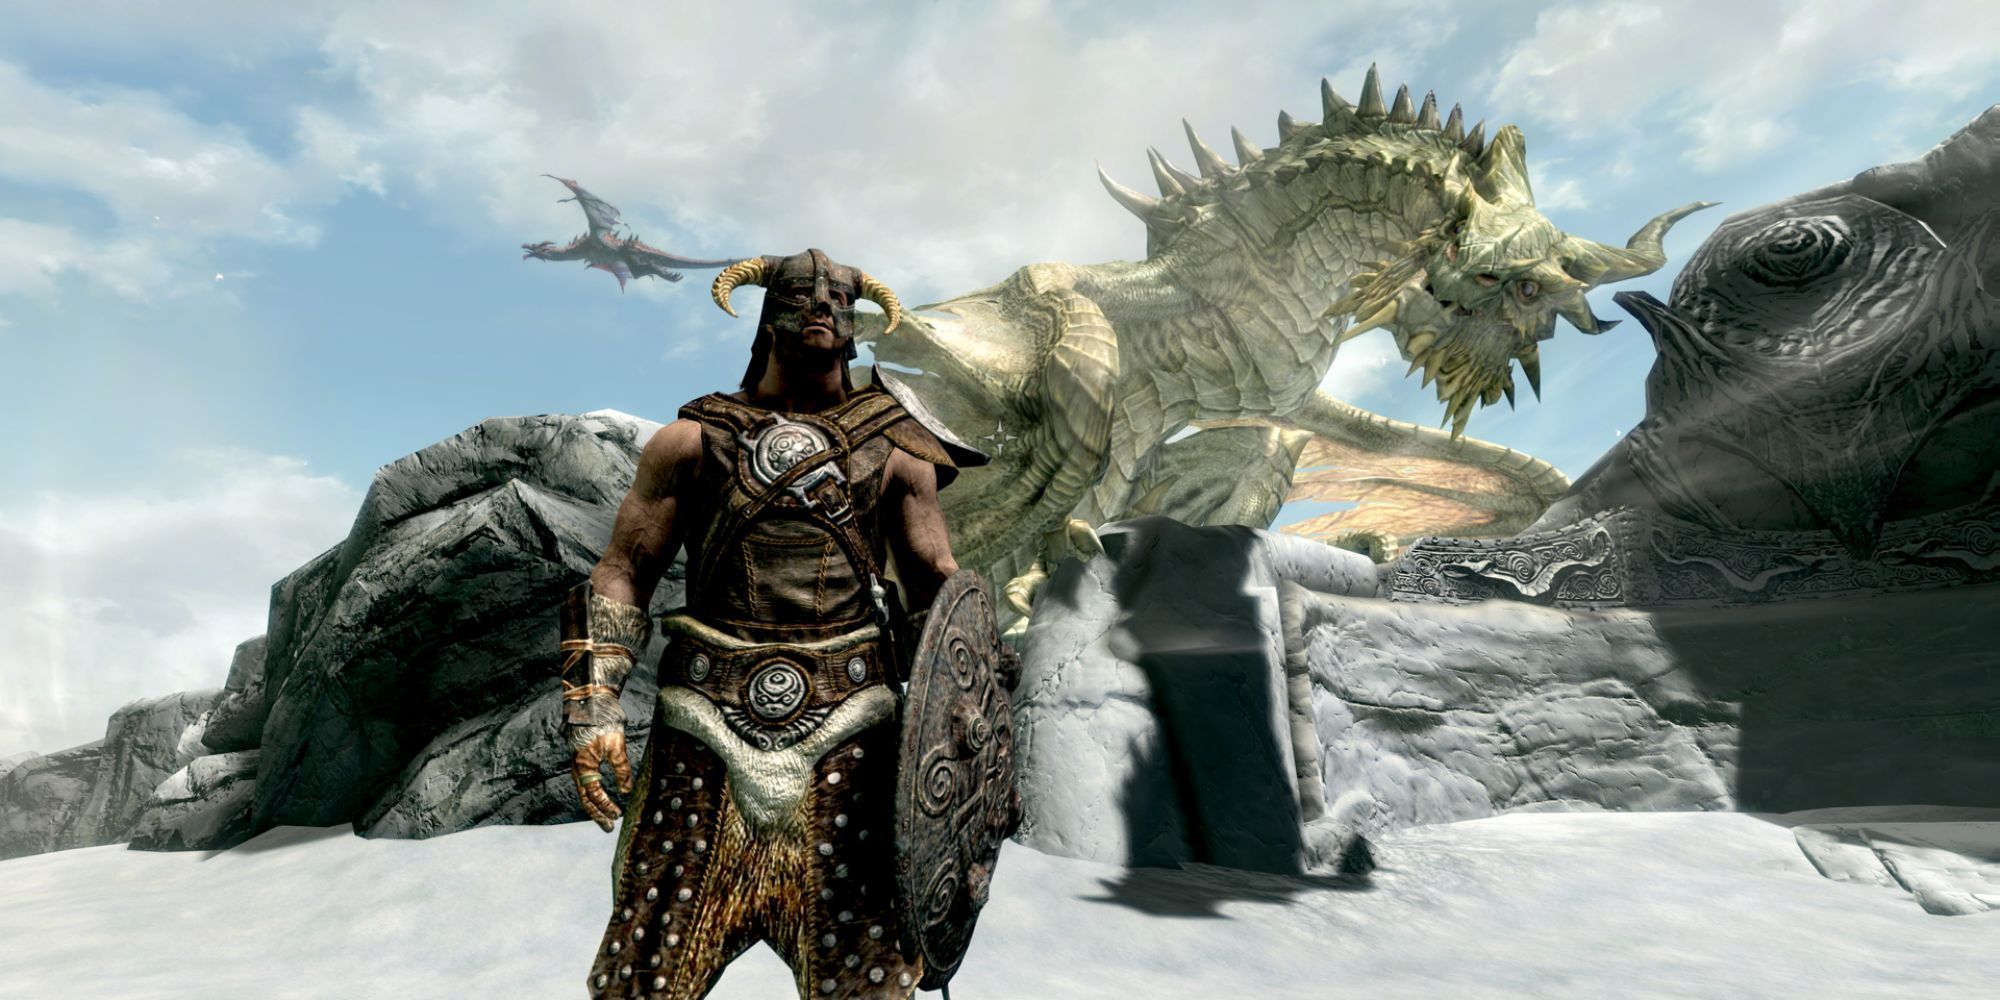 Skyrim Dragonborn And Paarthurnax